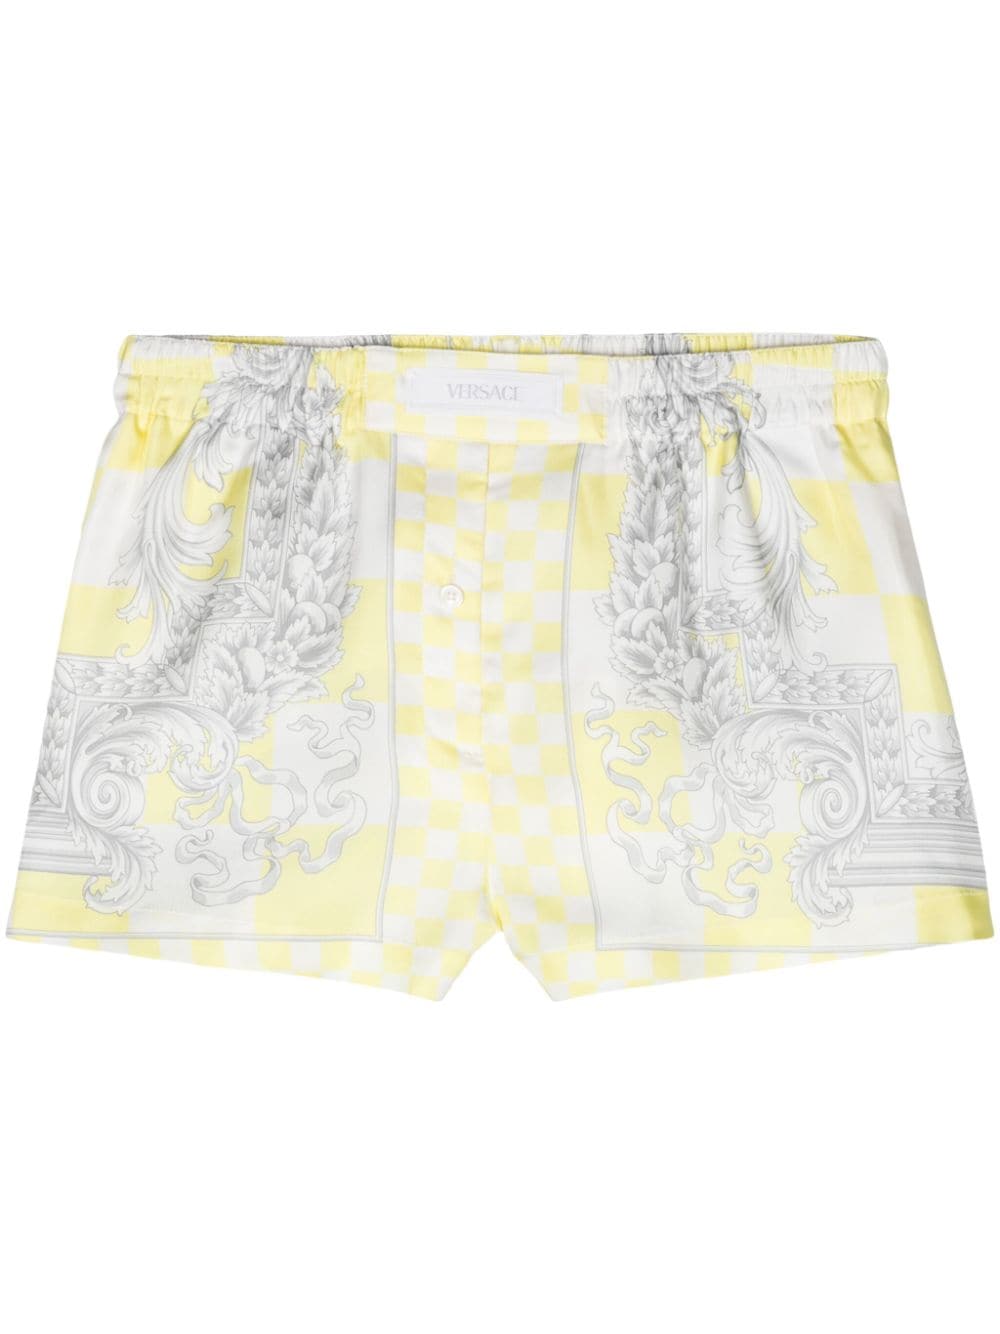 Barocco-print silk shorts